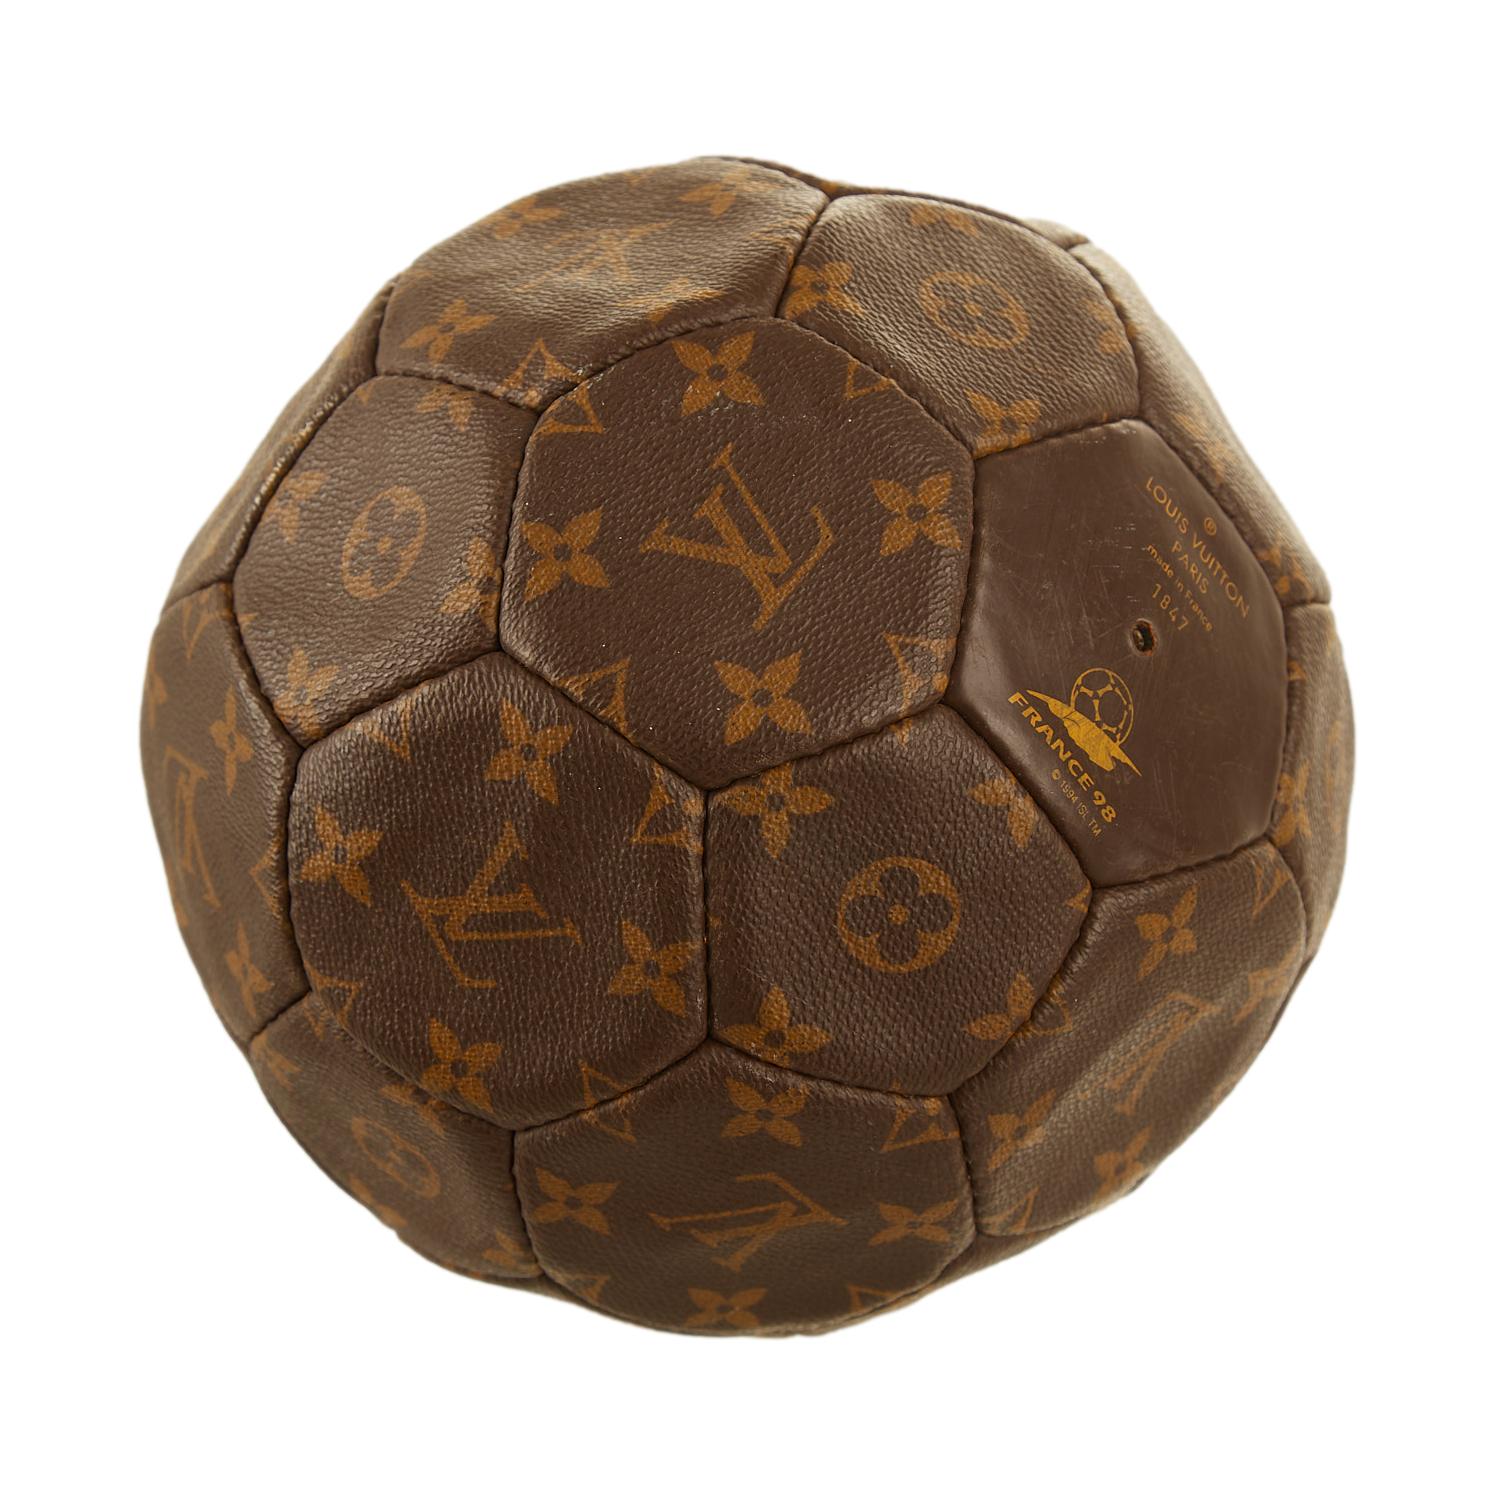 Vintage Louis Vuitton Soccer Ball